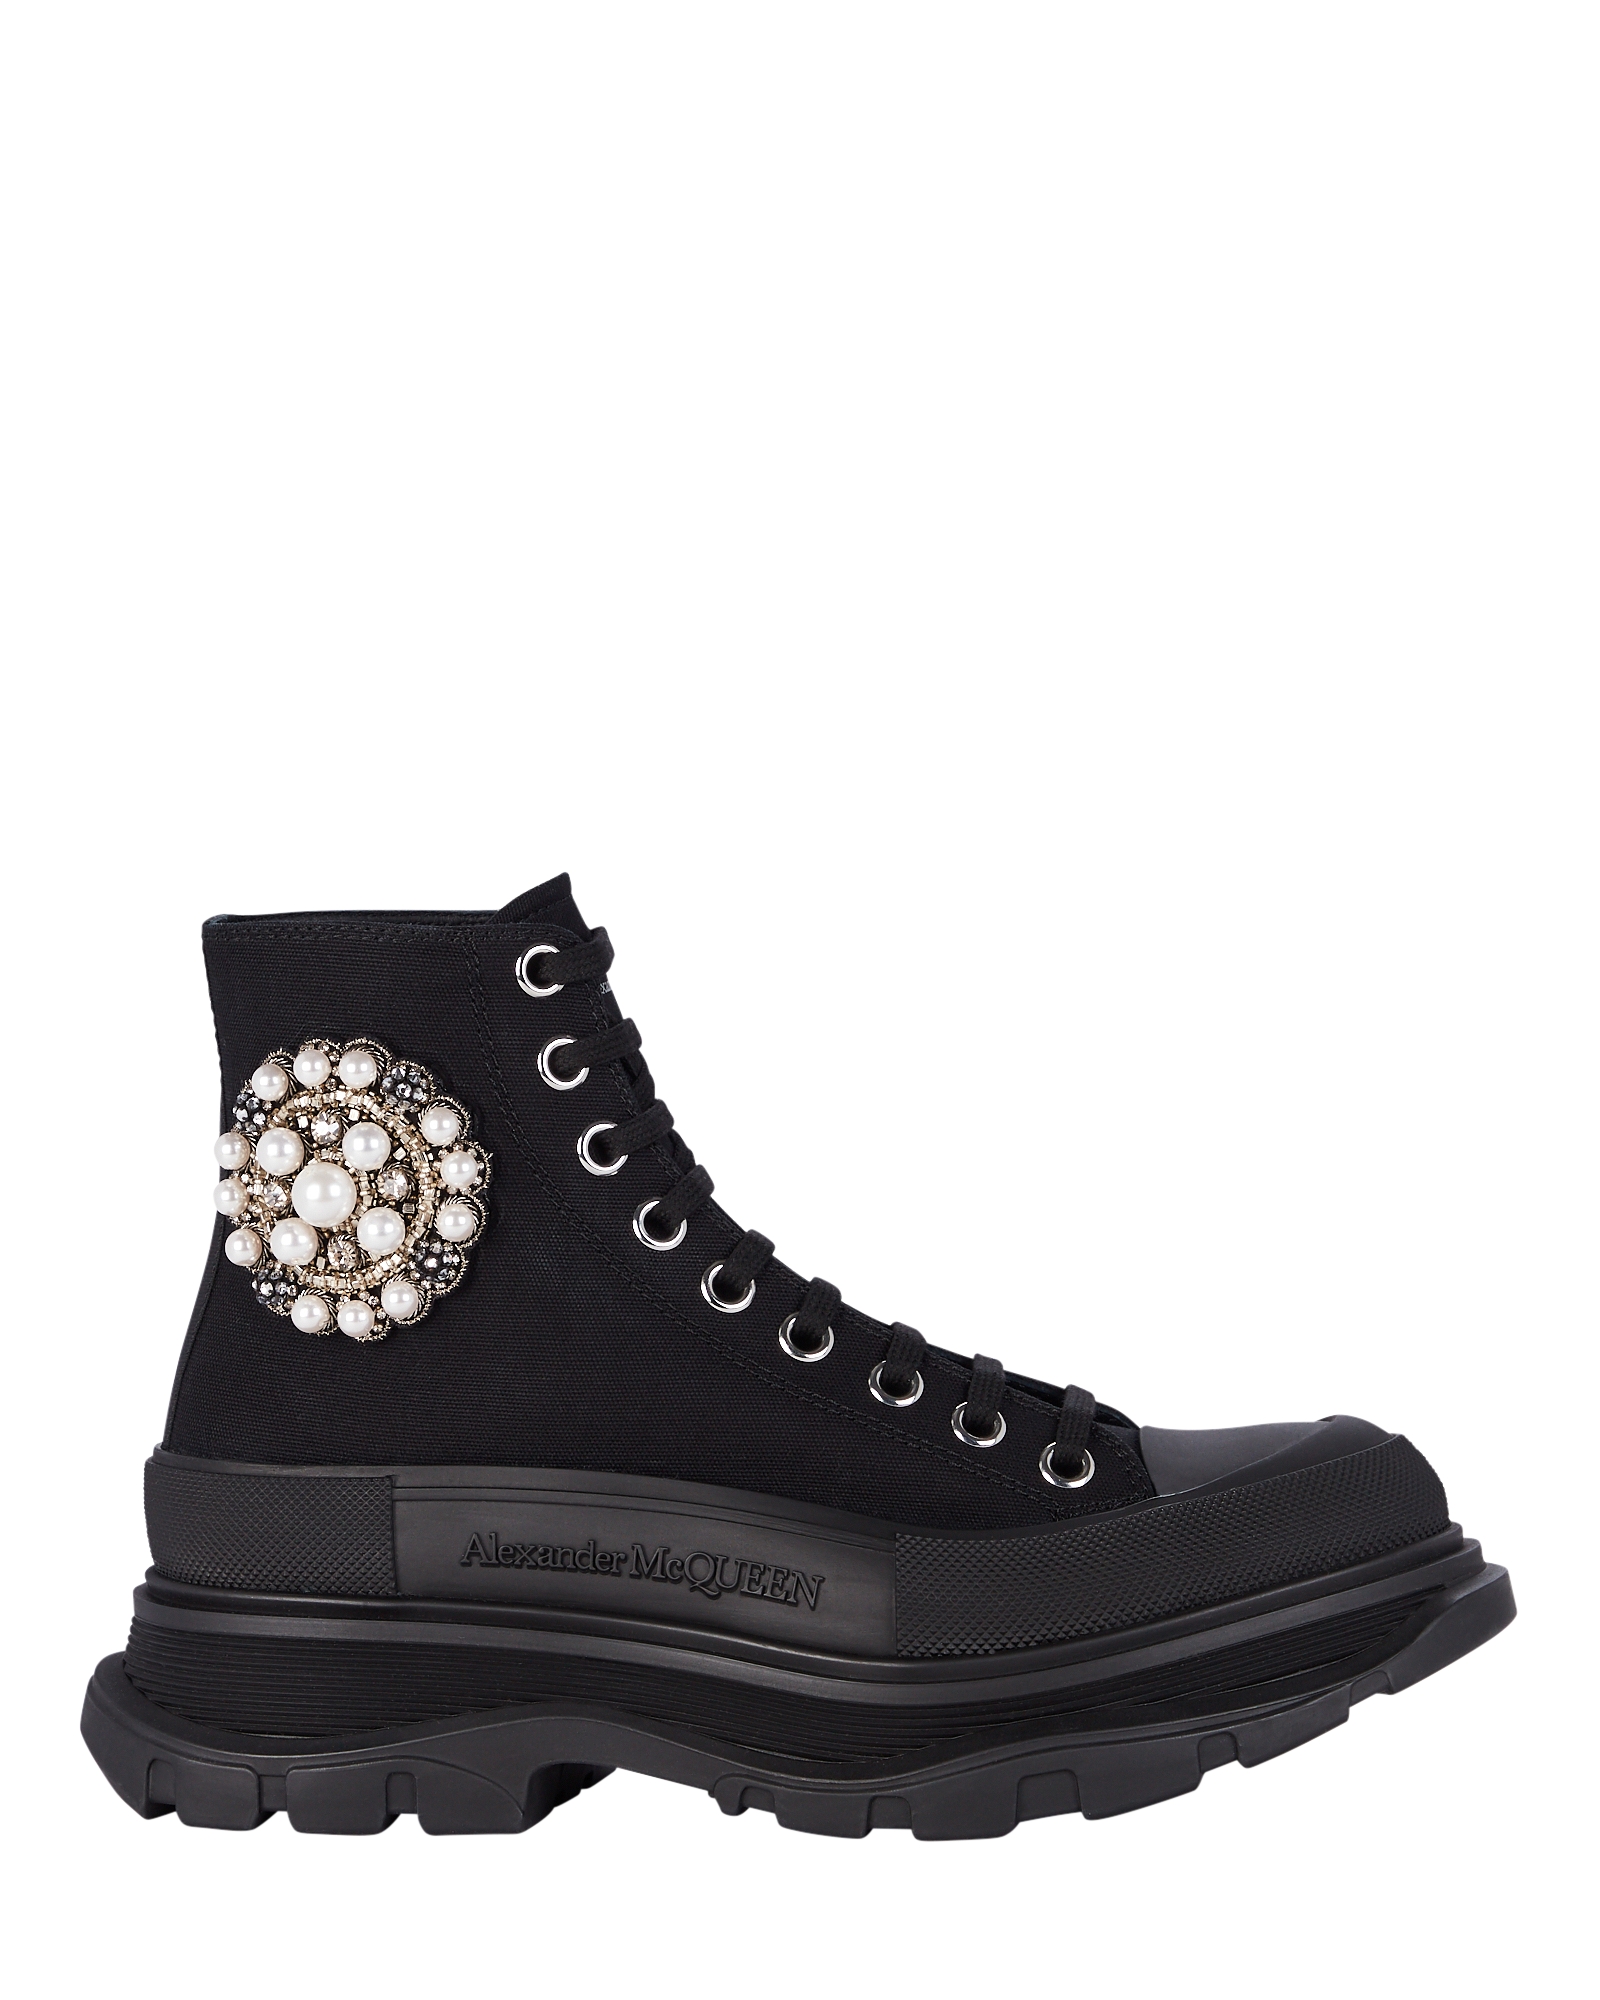 Alexander McQueen Tread Slick Leather Boots | INTERMIX®